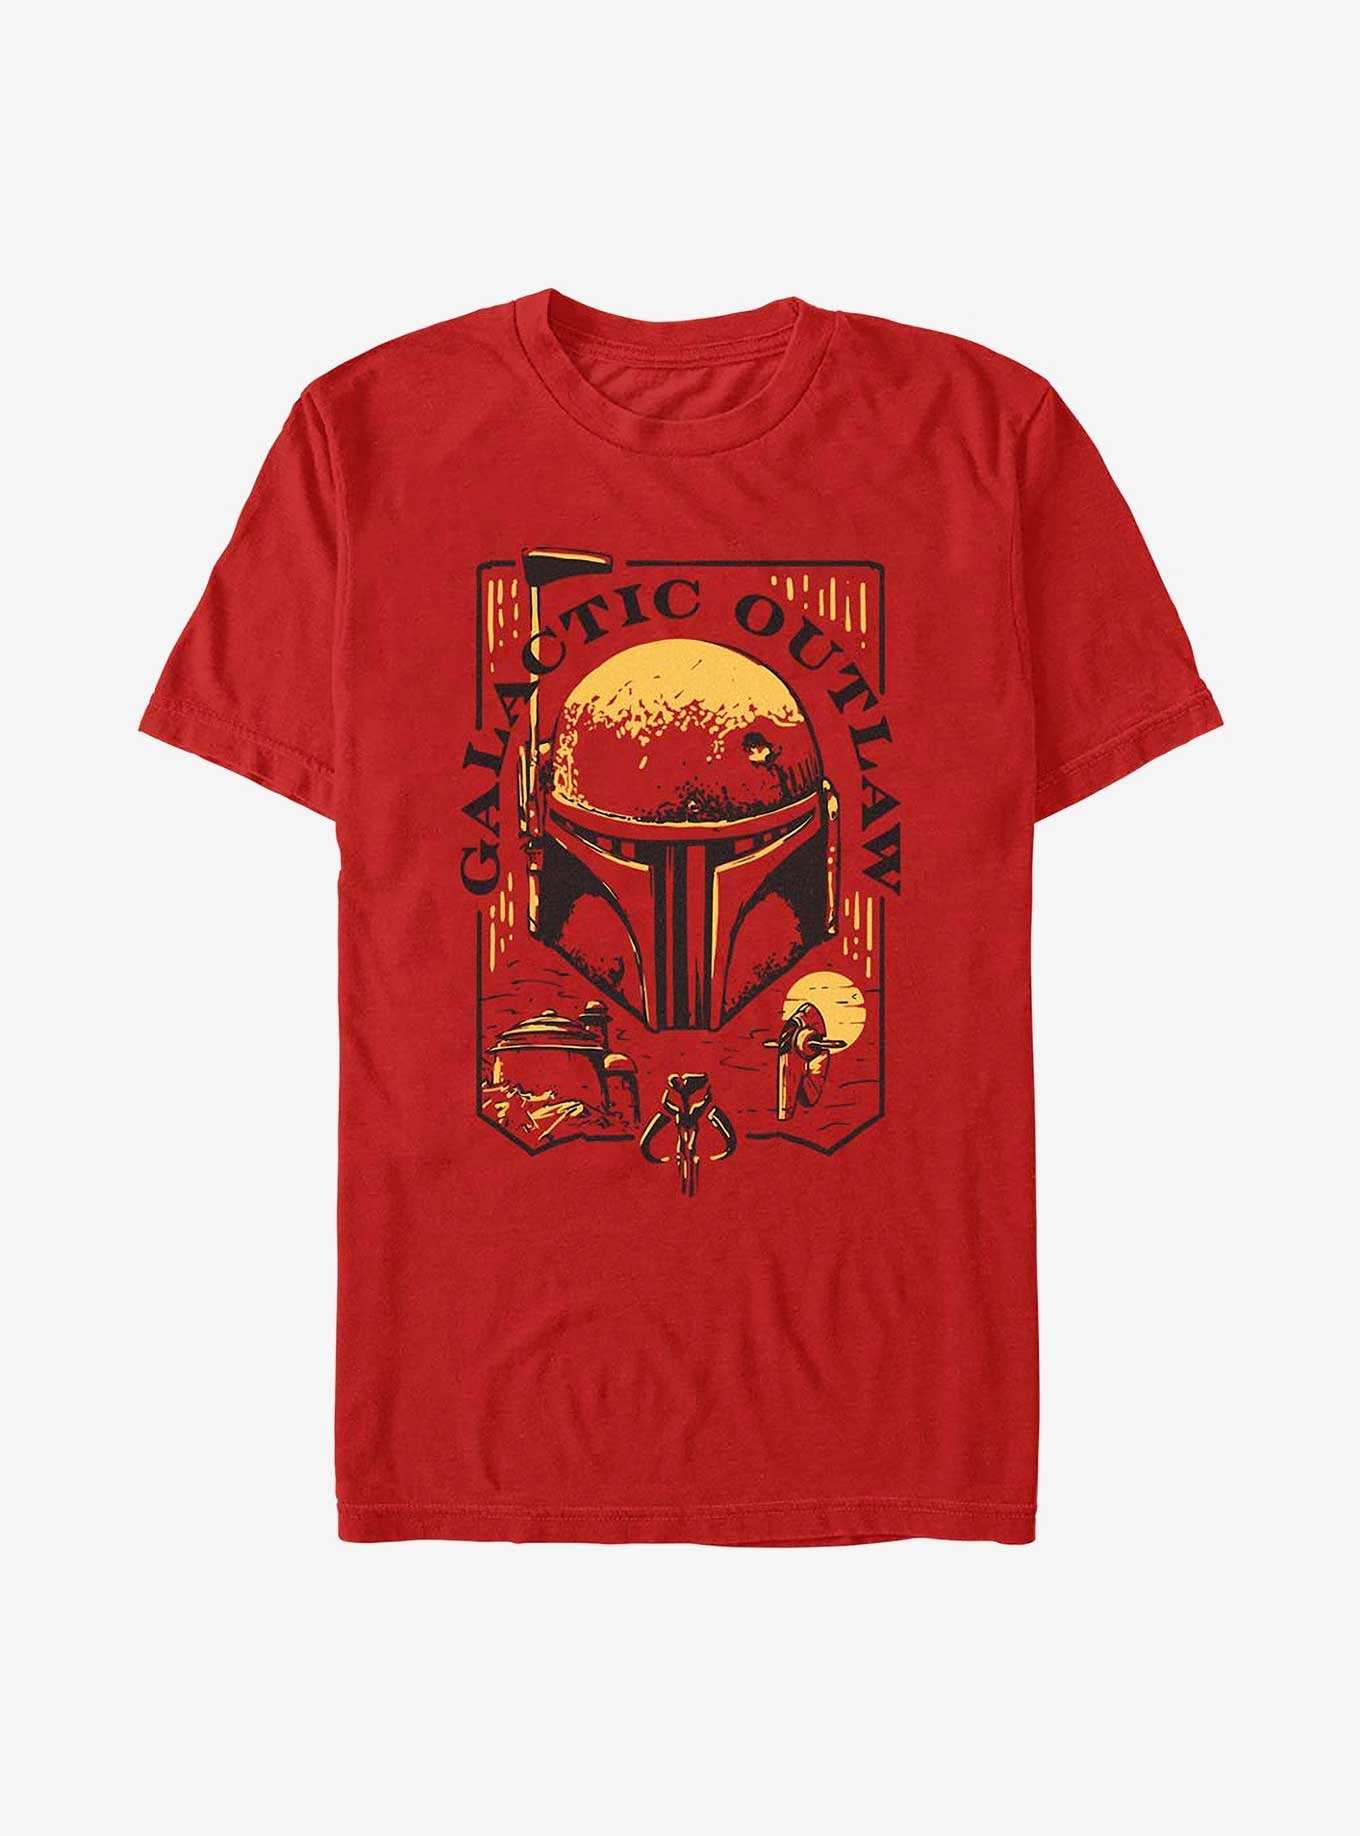 Star Wars The Book Of Boba Fett Galactic Outlaw Logo T-Shirt, , hi-res